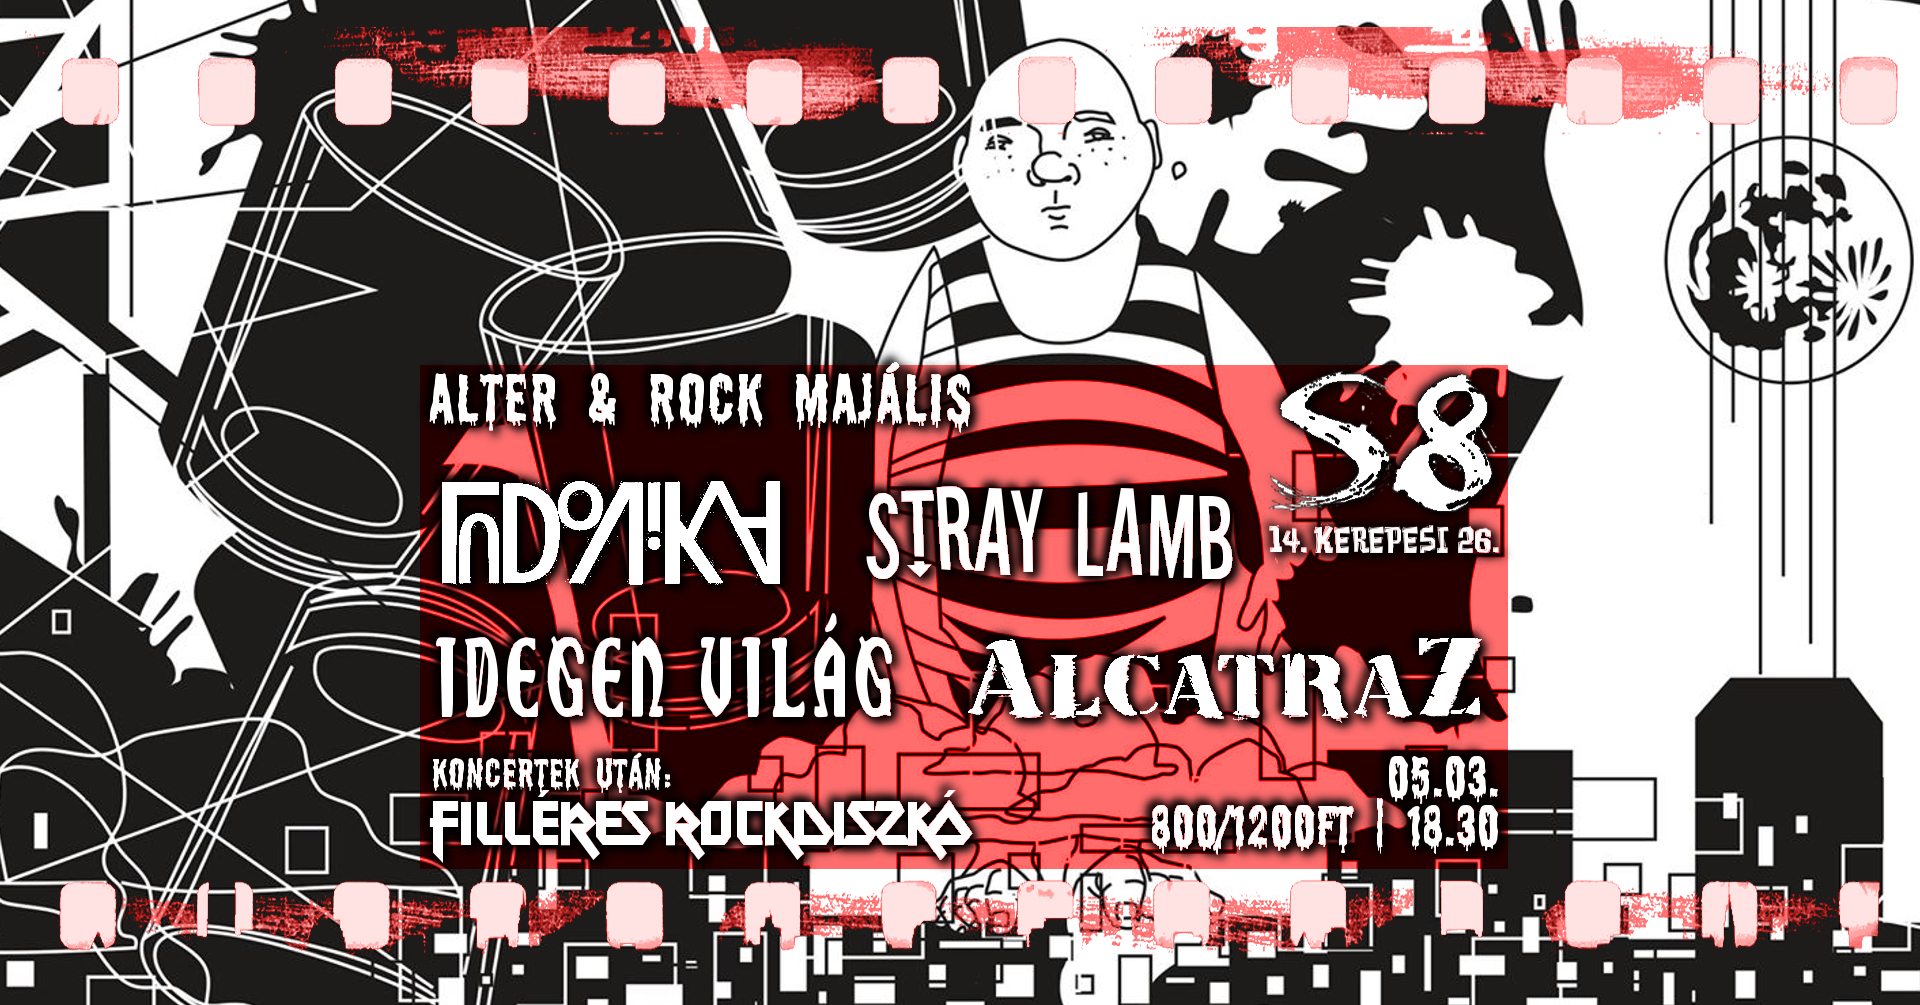 Alter & Rock Majális - Ludovika I The Alcatraz I Idegen Világ I Stray Lamb